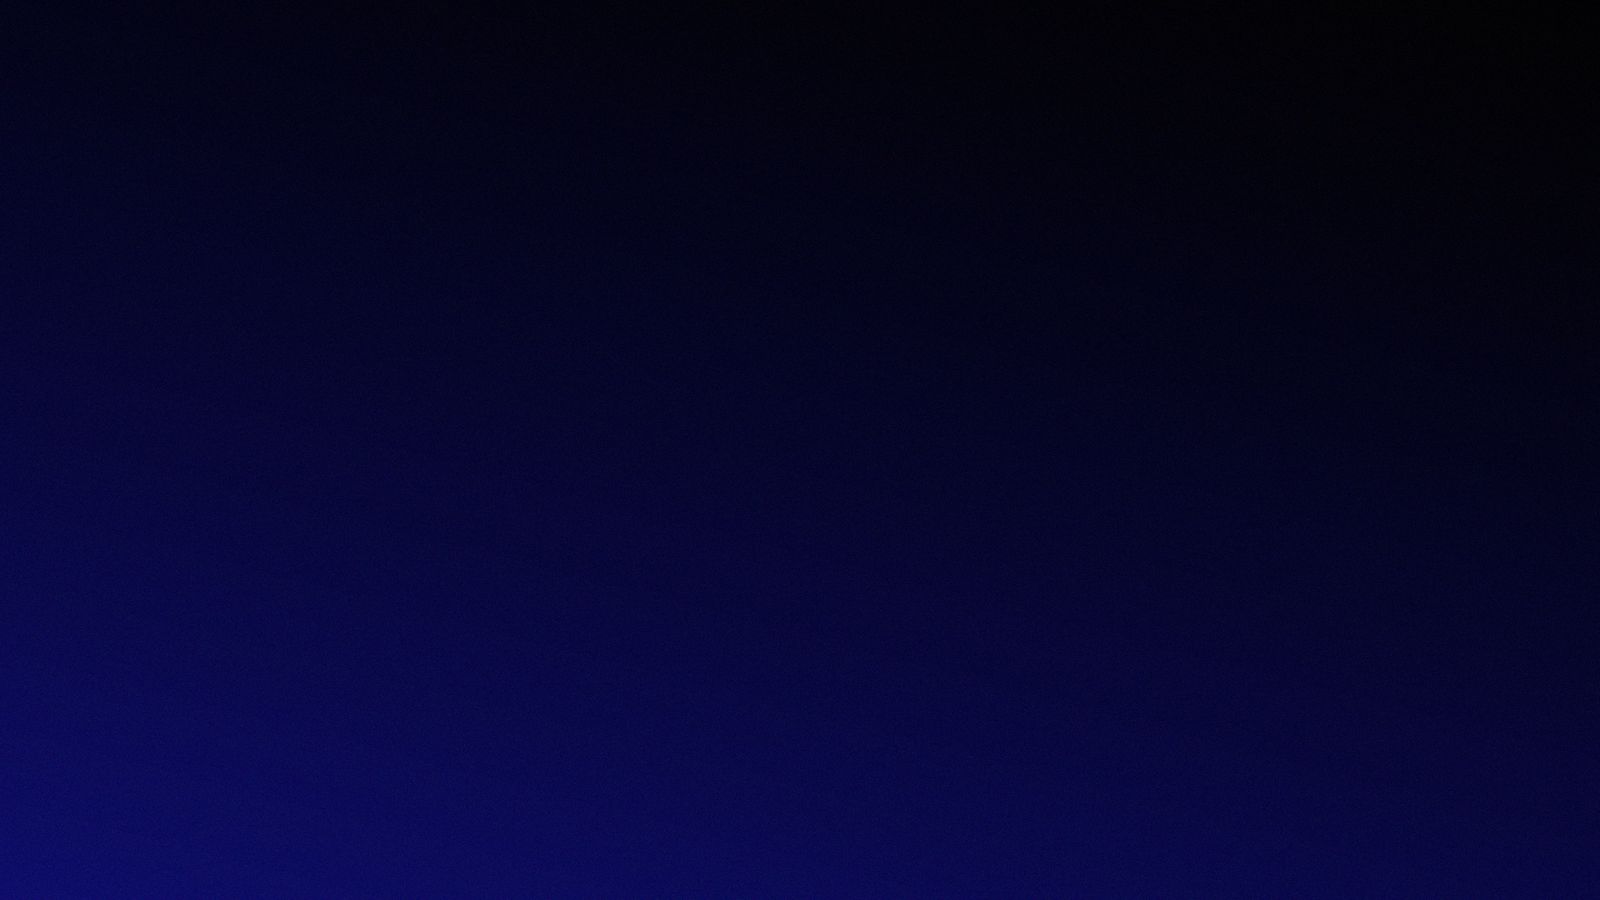 Download wallpaper 1600x900 gradient, color, blue, black widescreen 16:9 hd  background